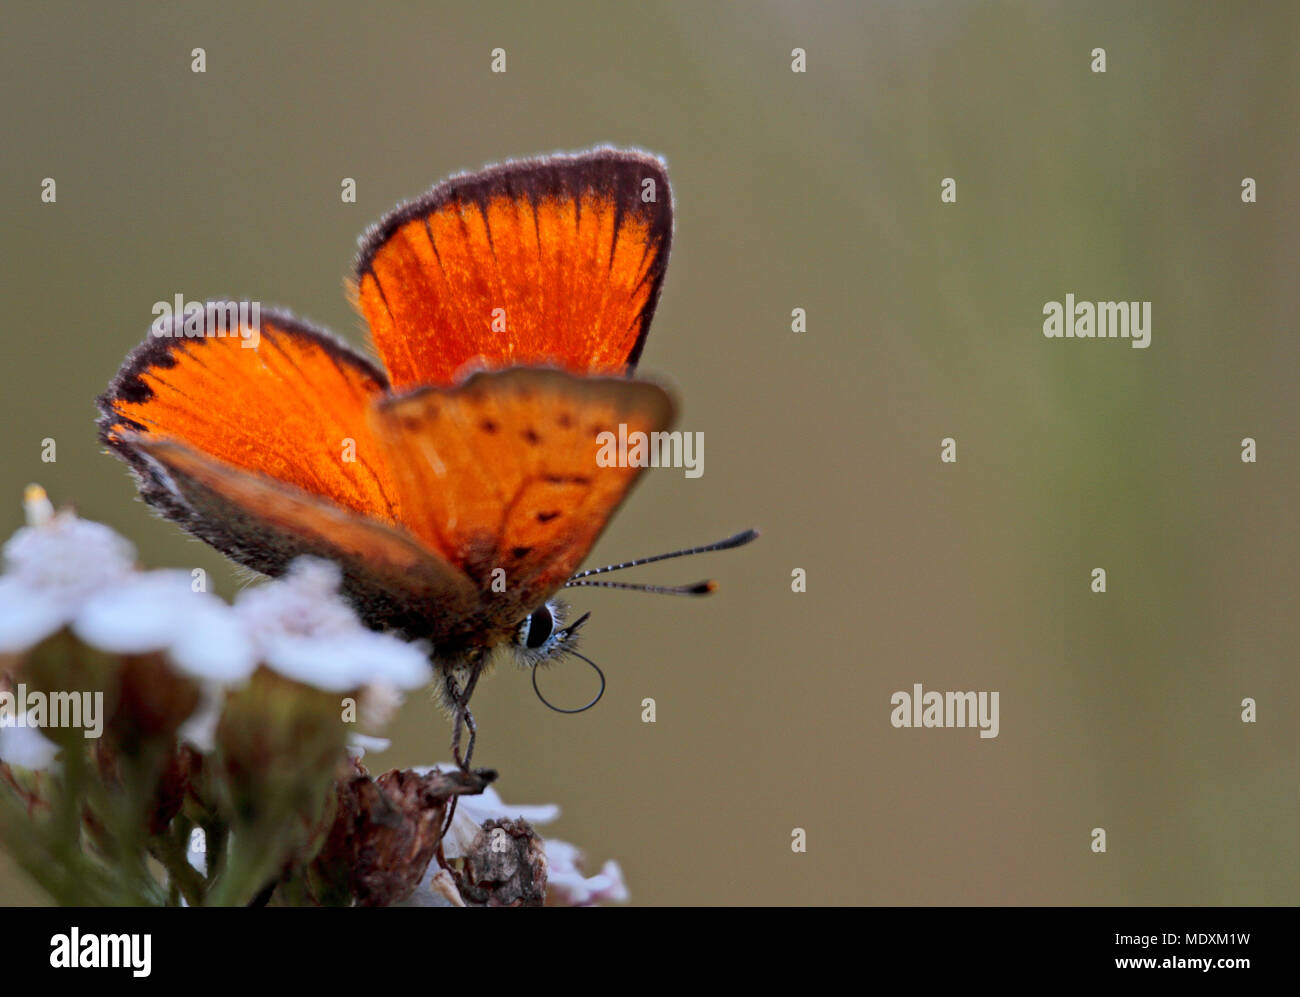 Beautiful, shiny and orange butterfly Stock Photo